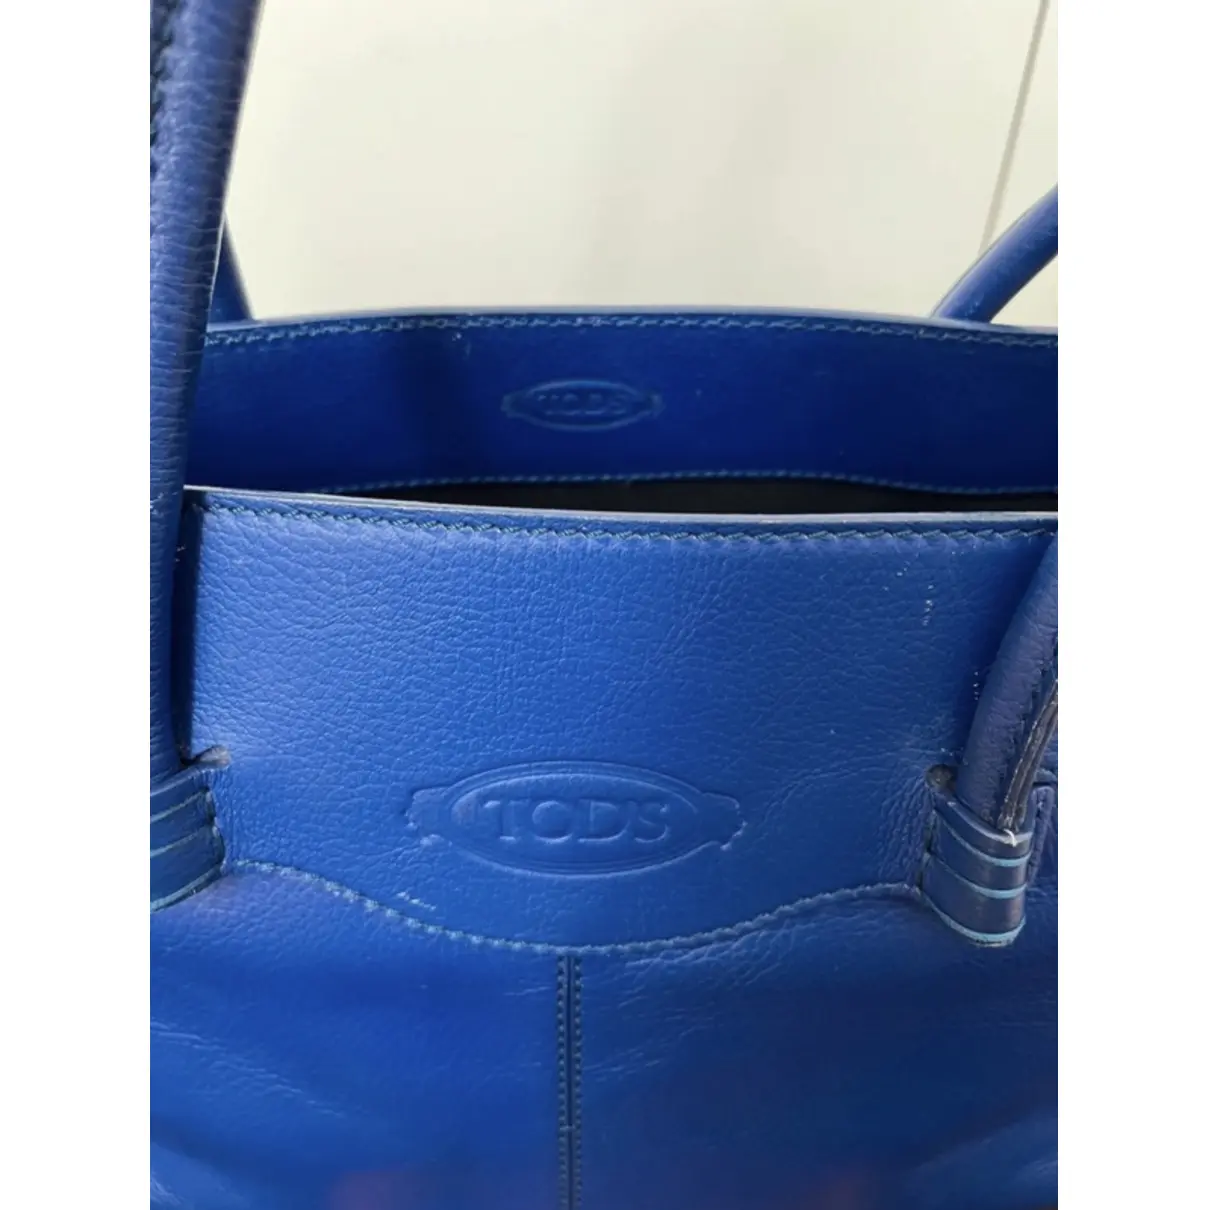 Buy Tod's Shopping Media leather handbag online